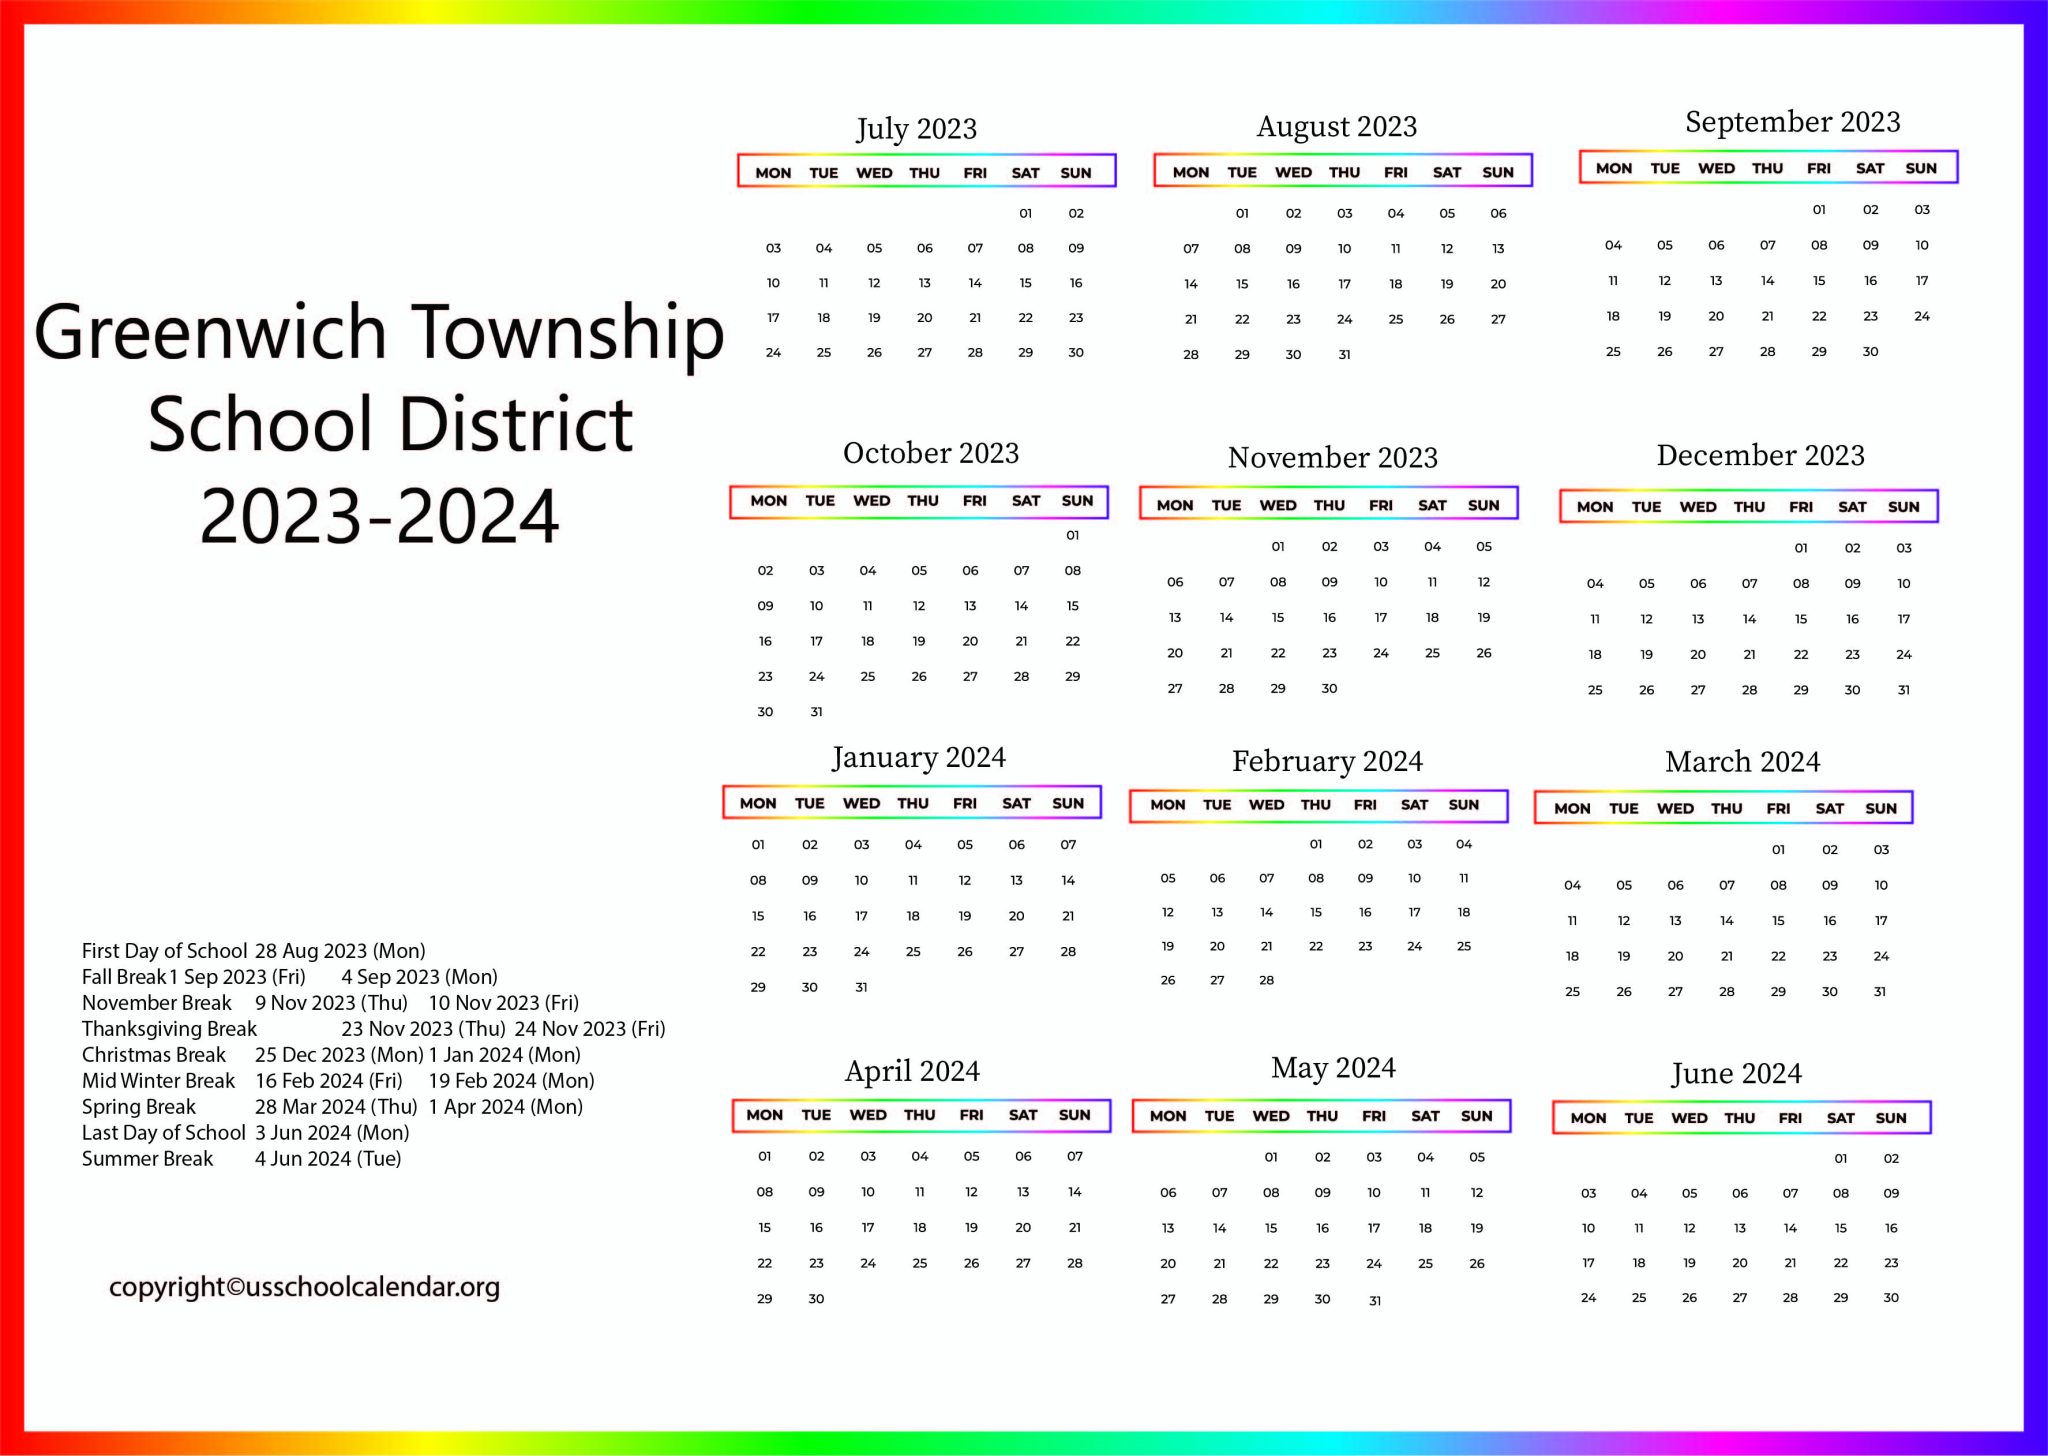 greenwich-township-school-district-calendar-holidays-2023-2024